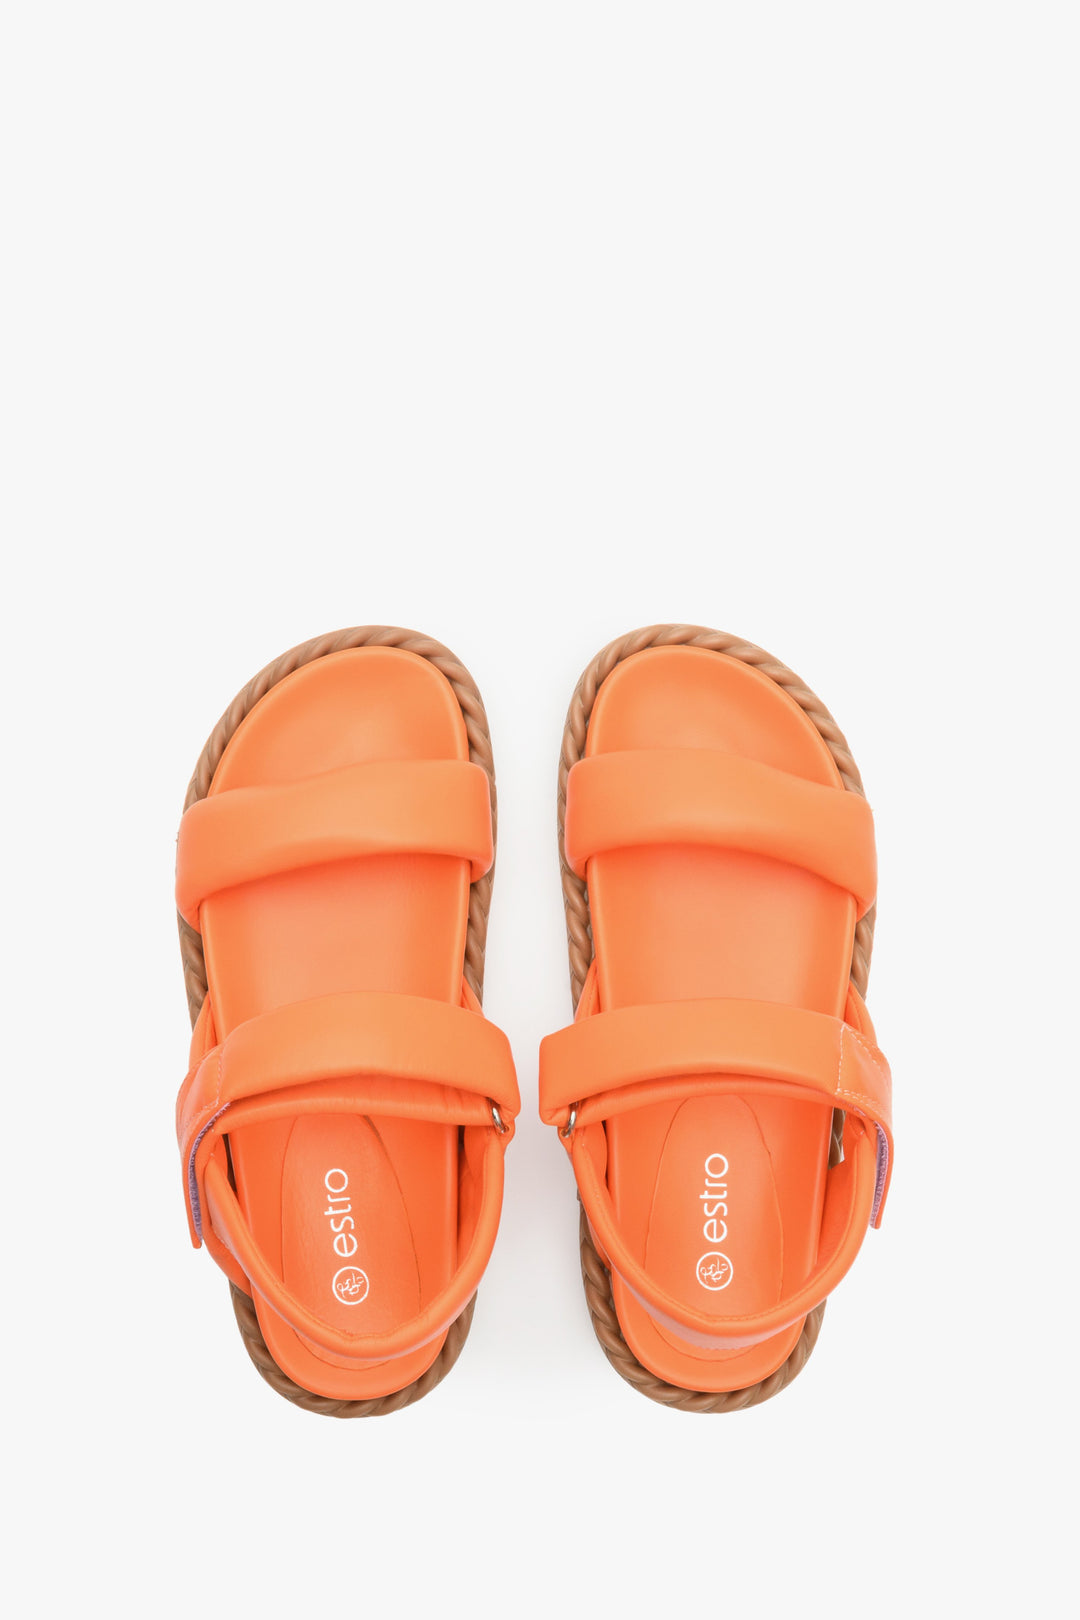 Estro women's orange leather flat sandals.